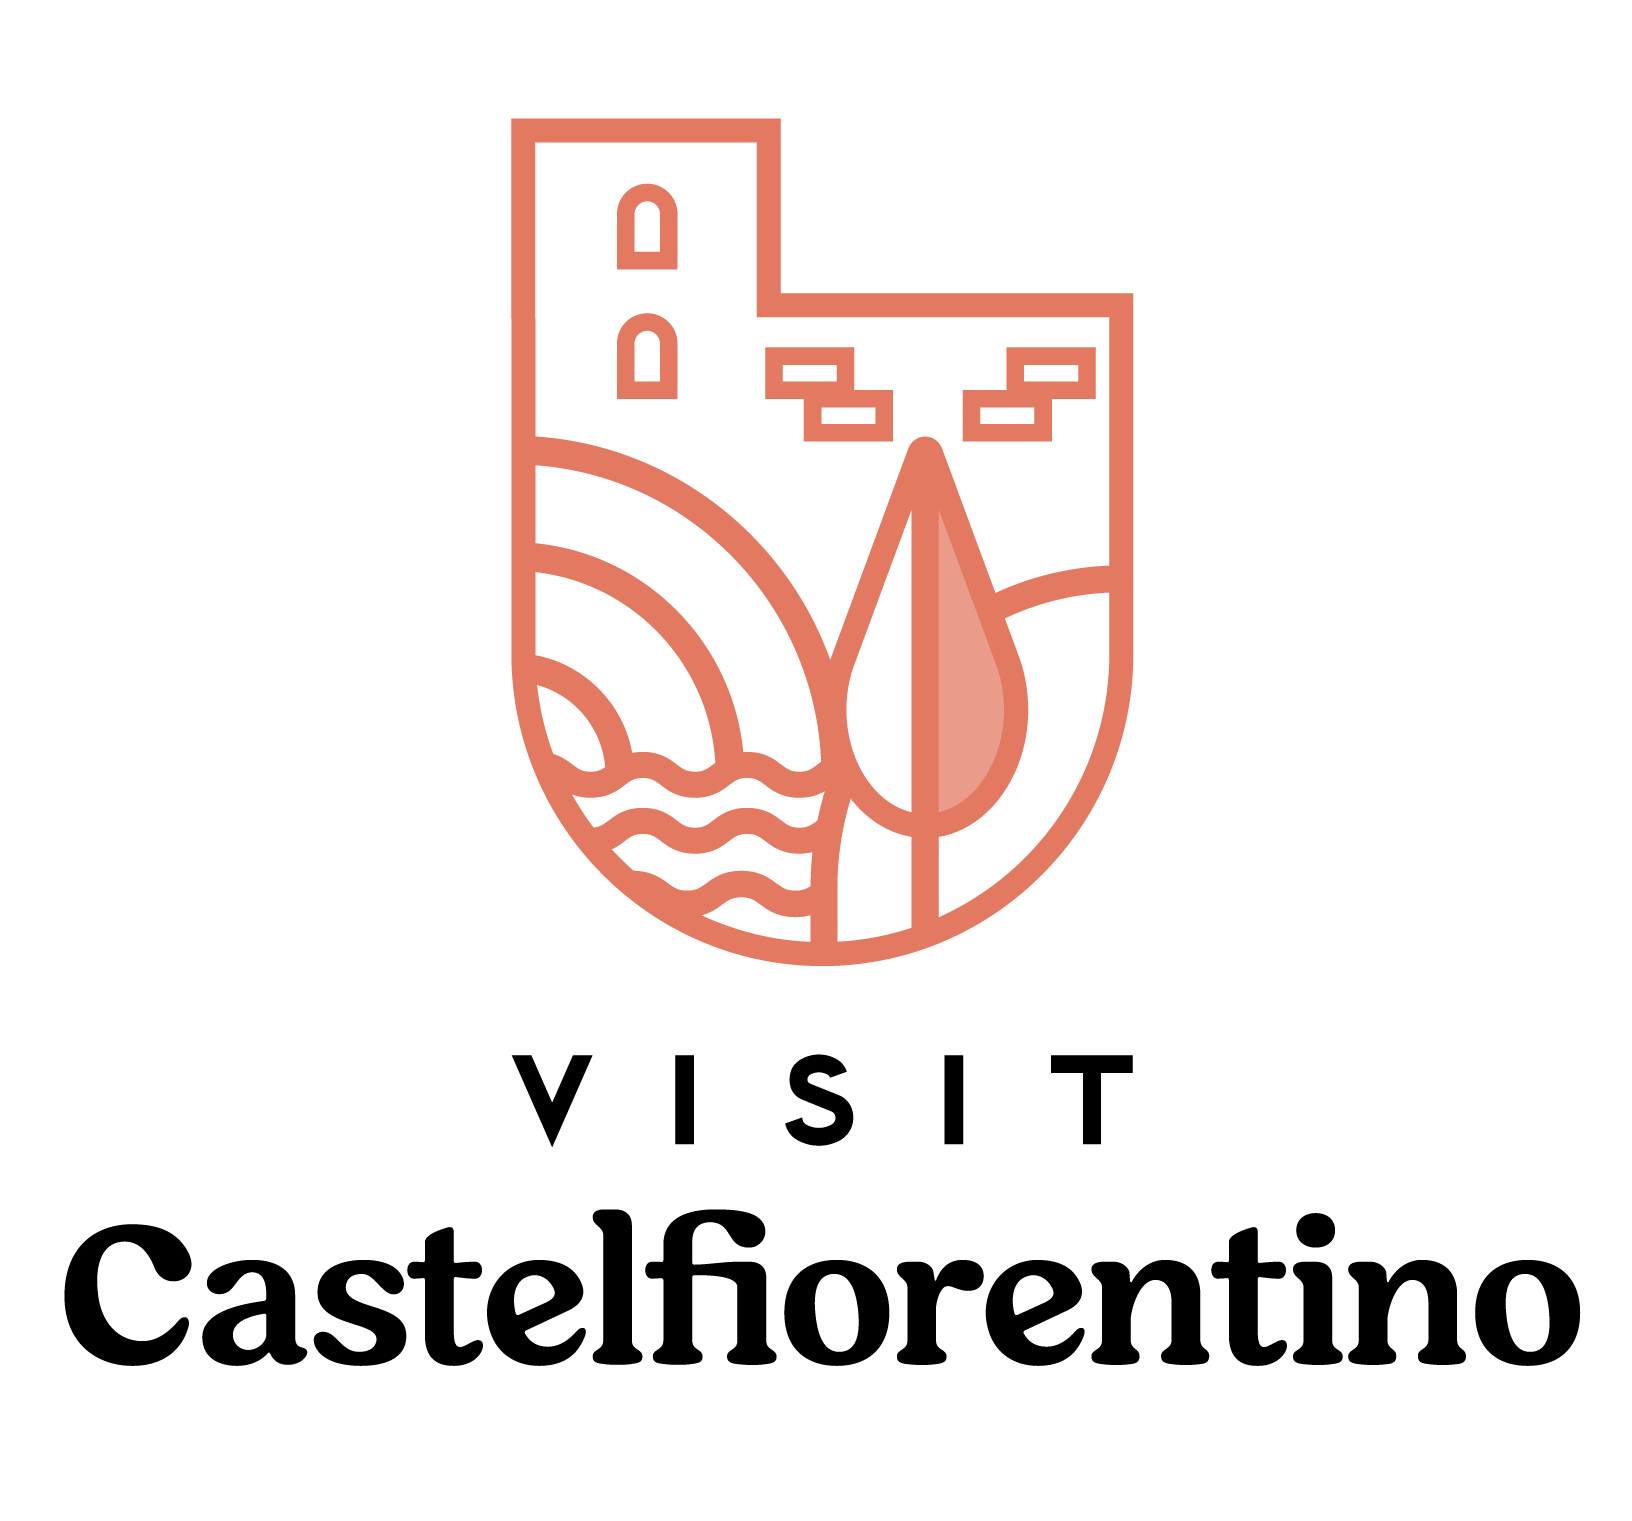 Visit Castelfiorentino Portale turistico